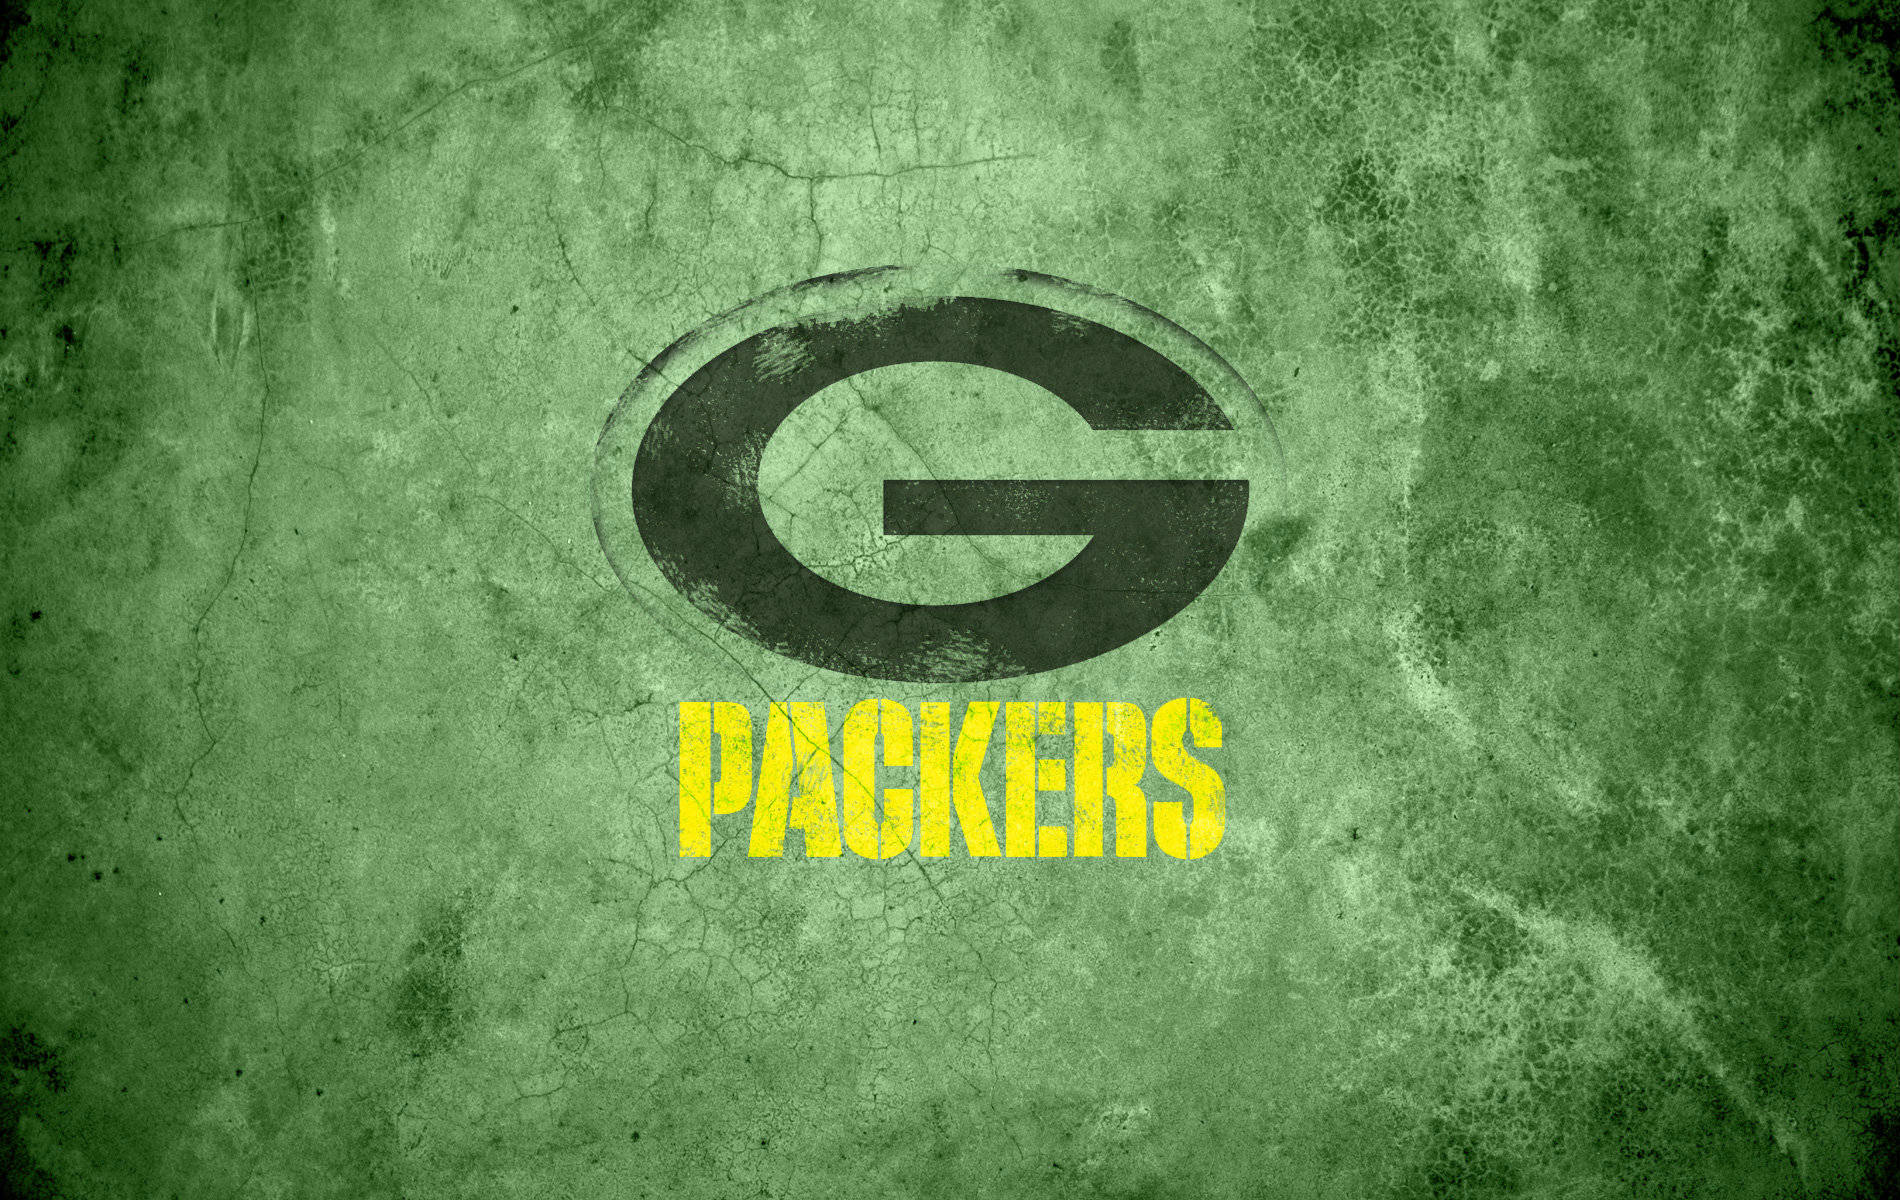 Green Bay Packers Football Club